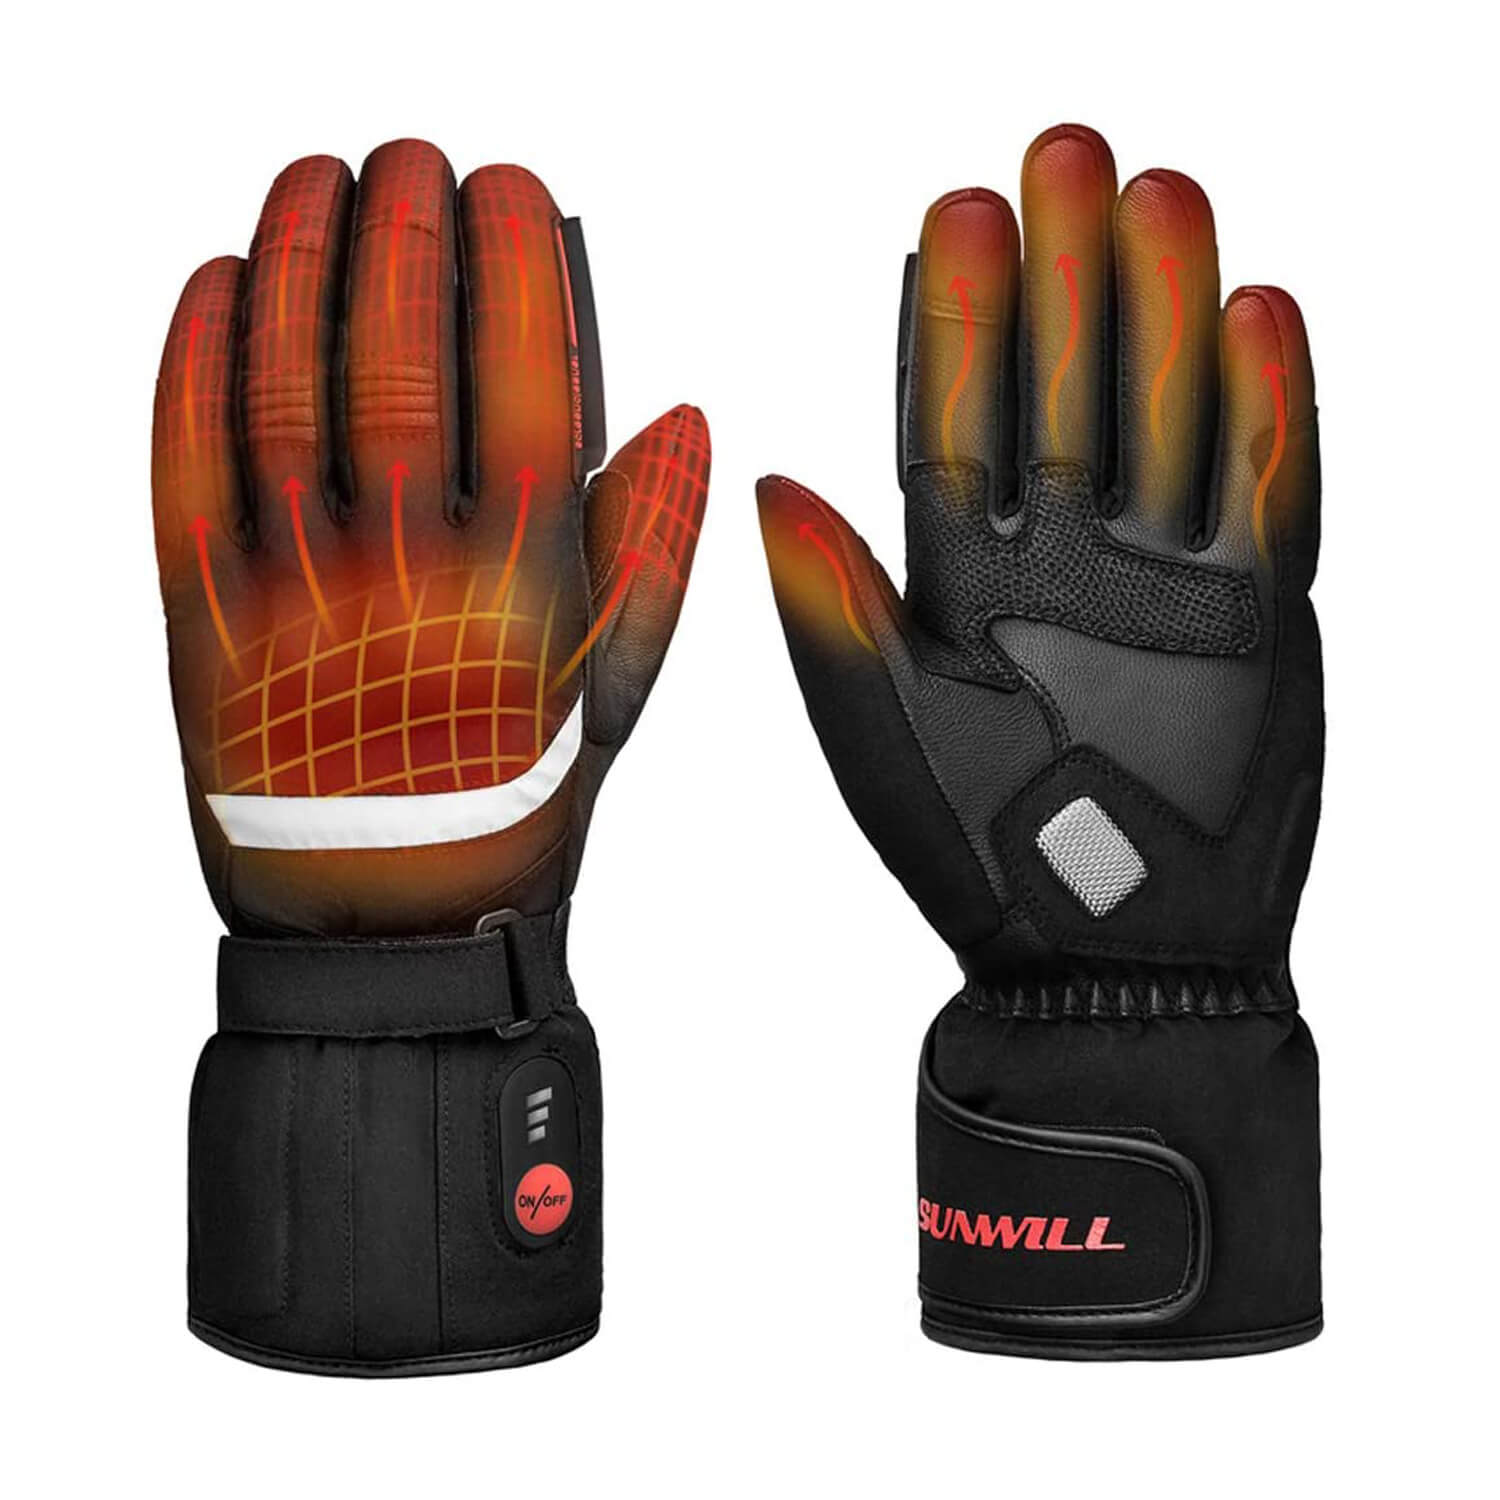 Sun Will Anti-fall Heated Gloves